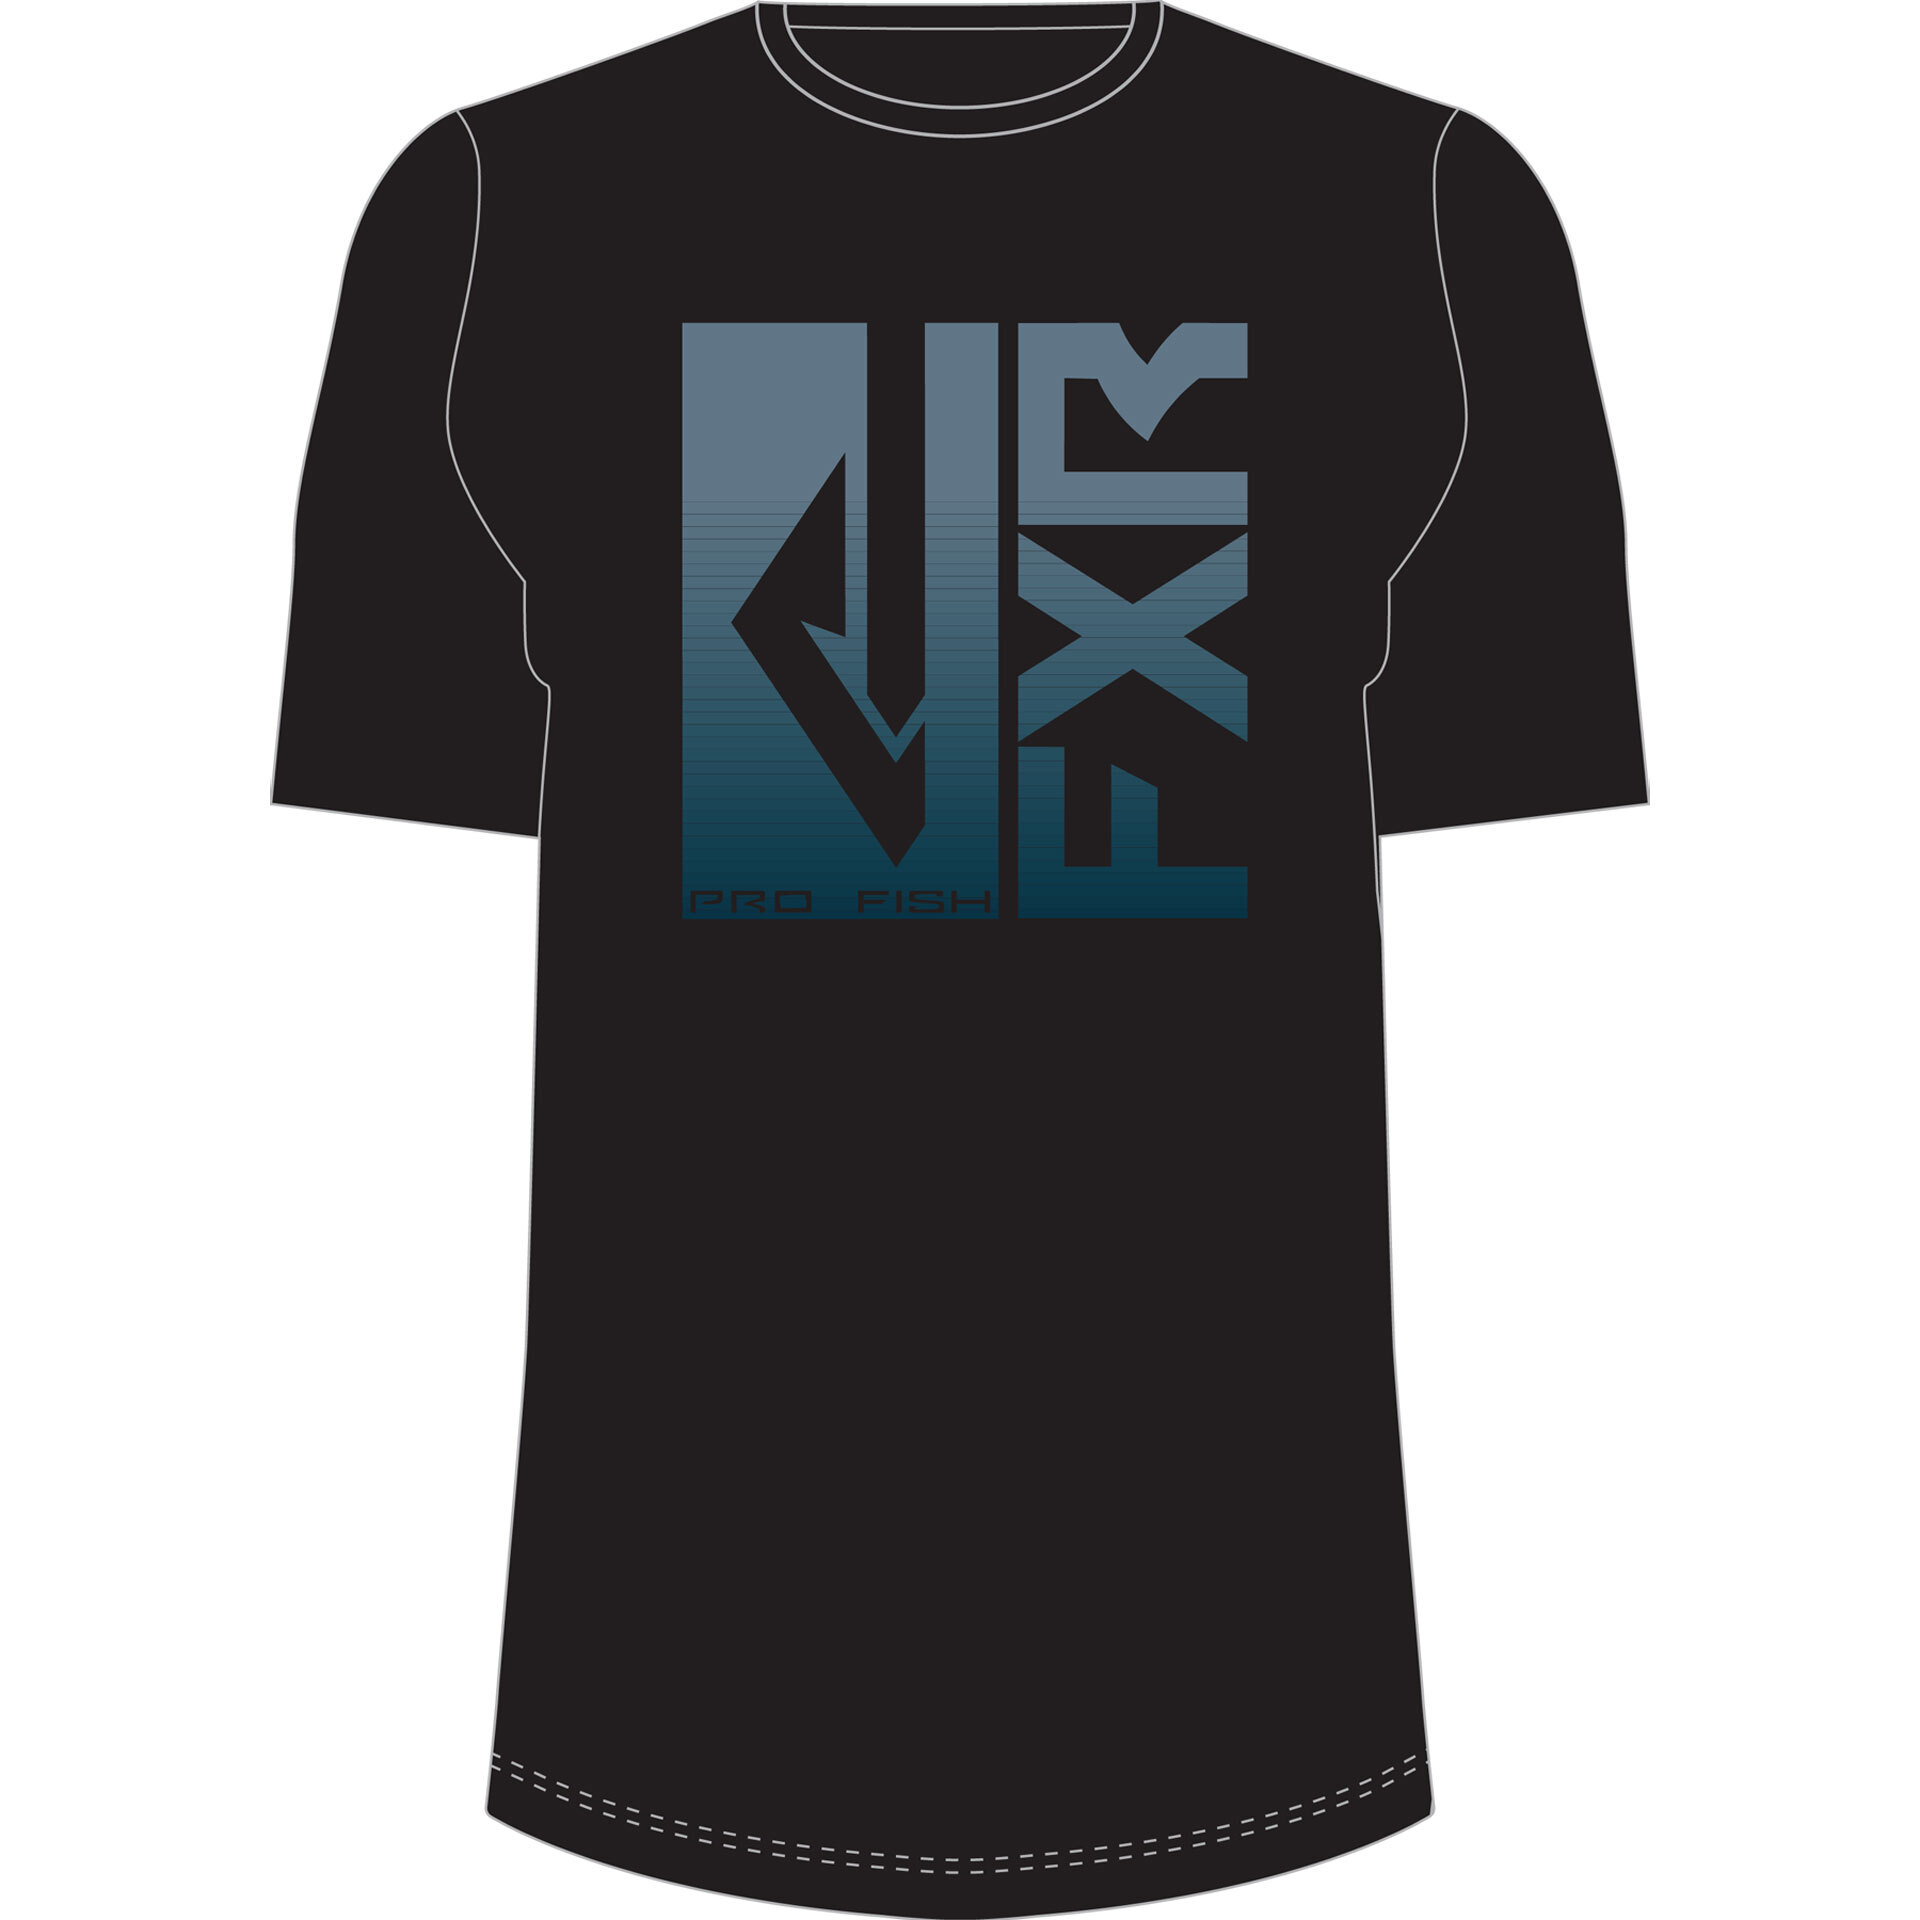 FXR® Hook'd T Shirt Small black/slategray